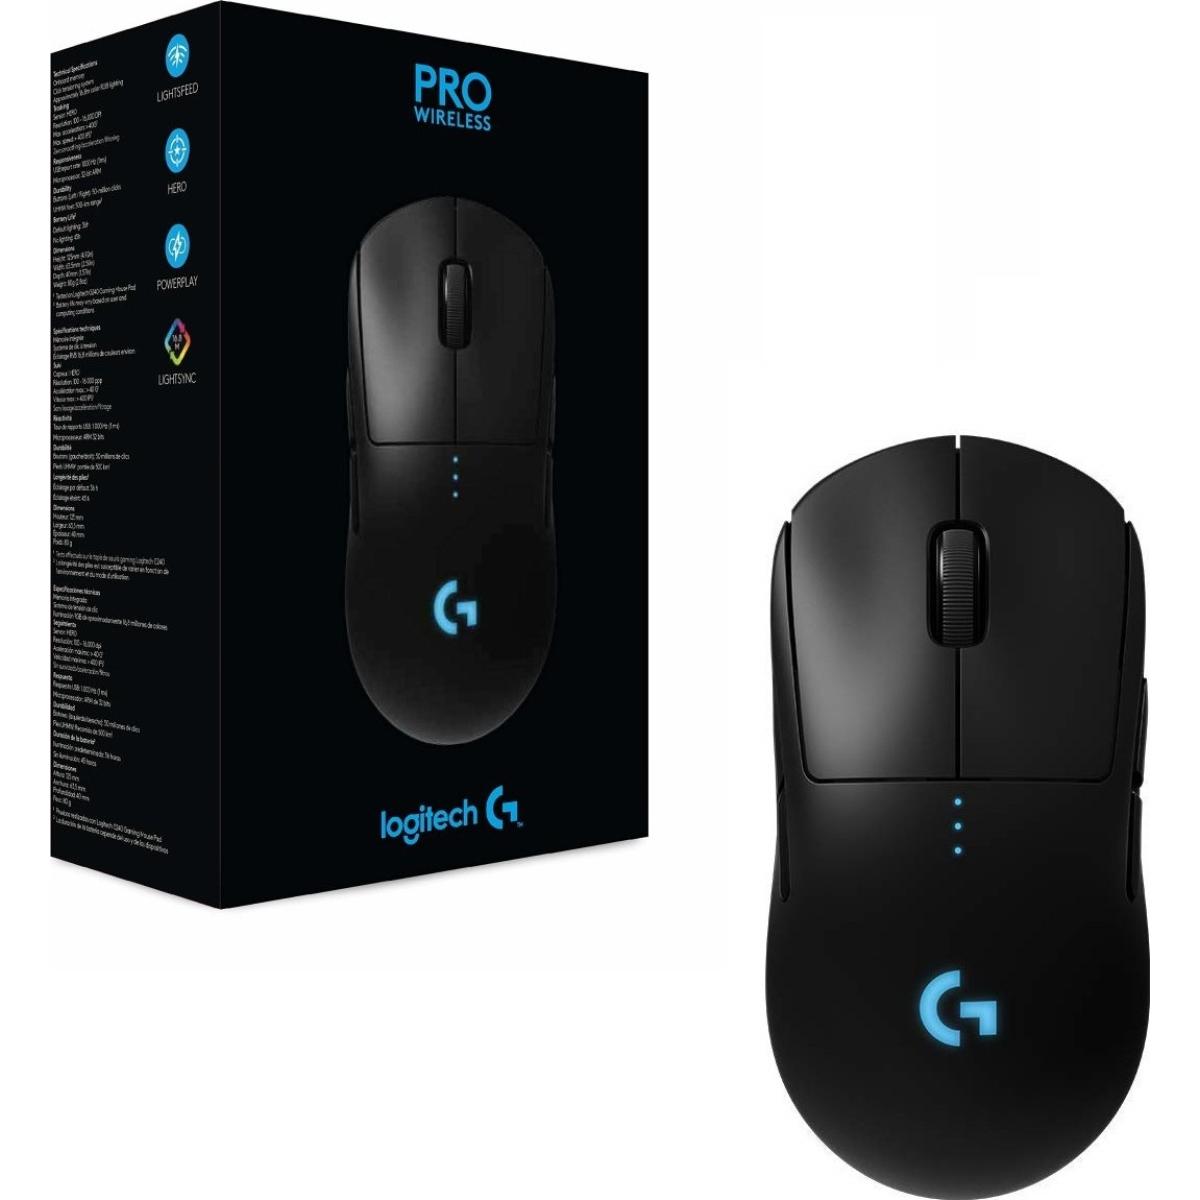 Мышь pro. Логитеч g Pro мышь. Logitech g Pro Wireless Mouse. Игровая мышь Logitech Lightspeed g Pro Wireless (910-005272). Лоджитек g Pro x мышка.